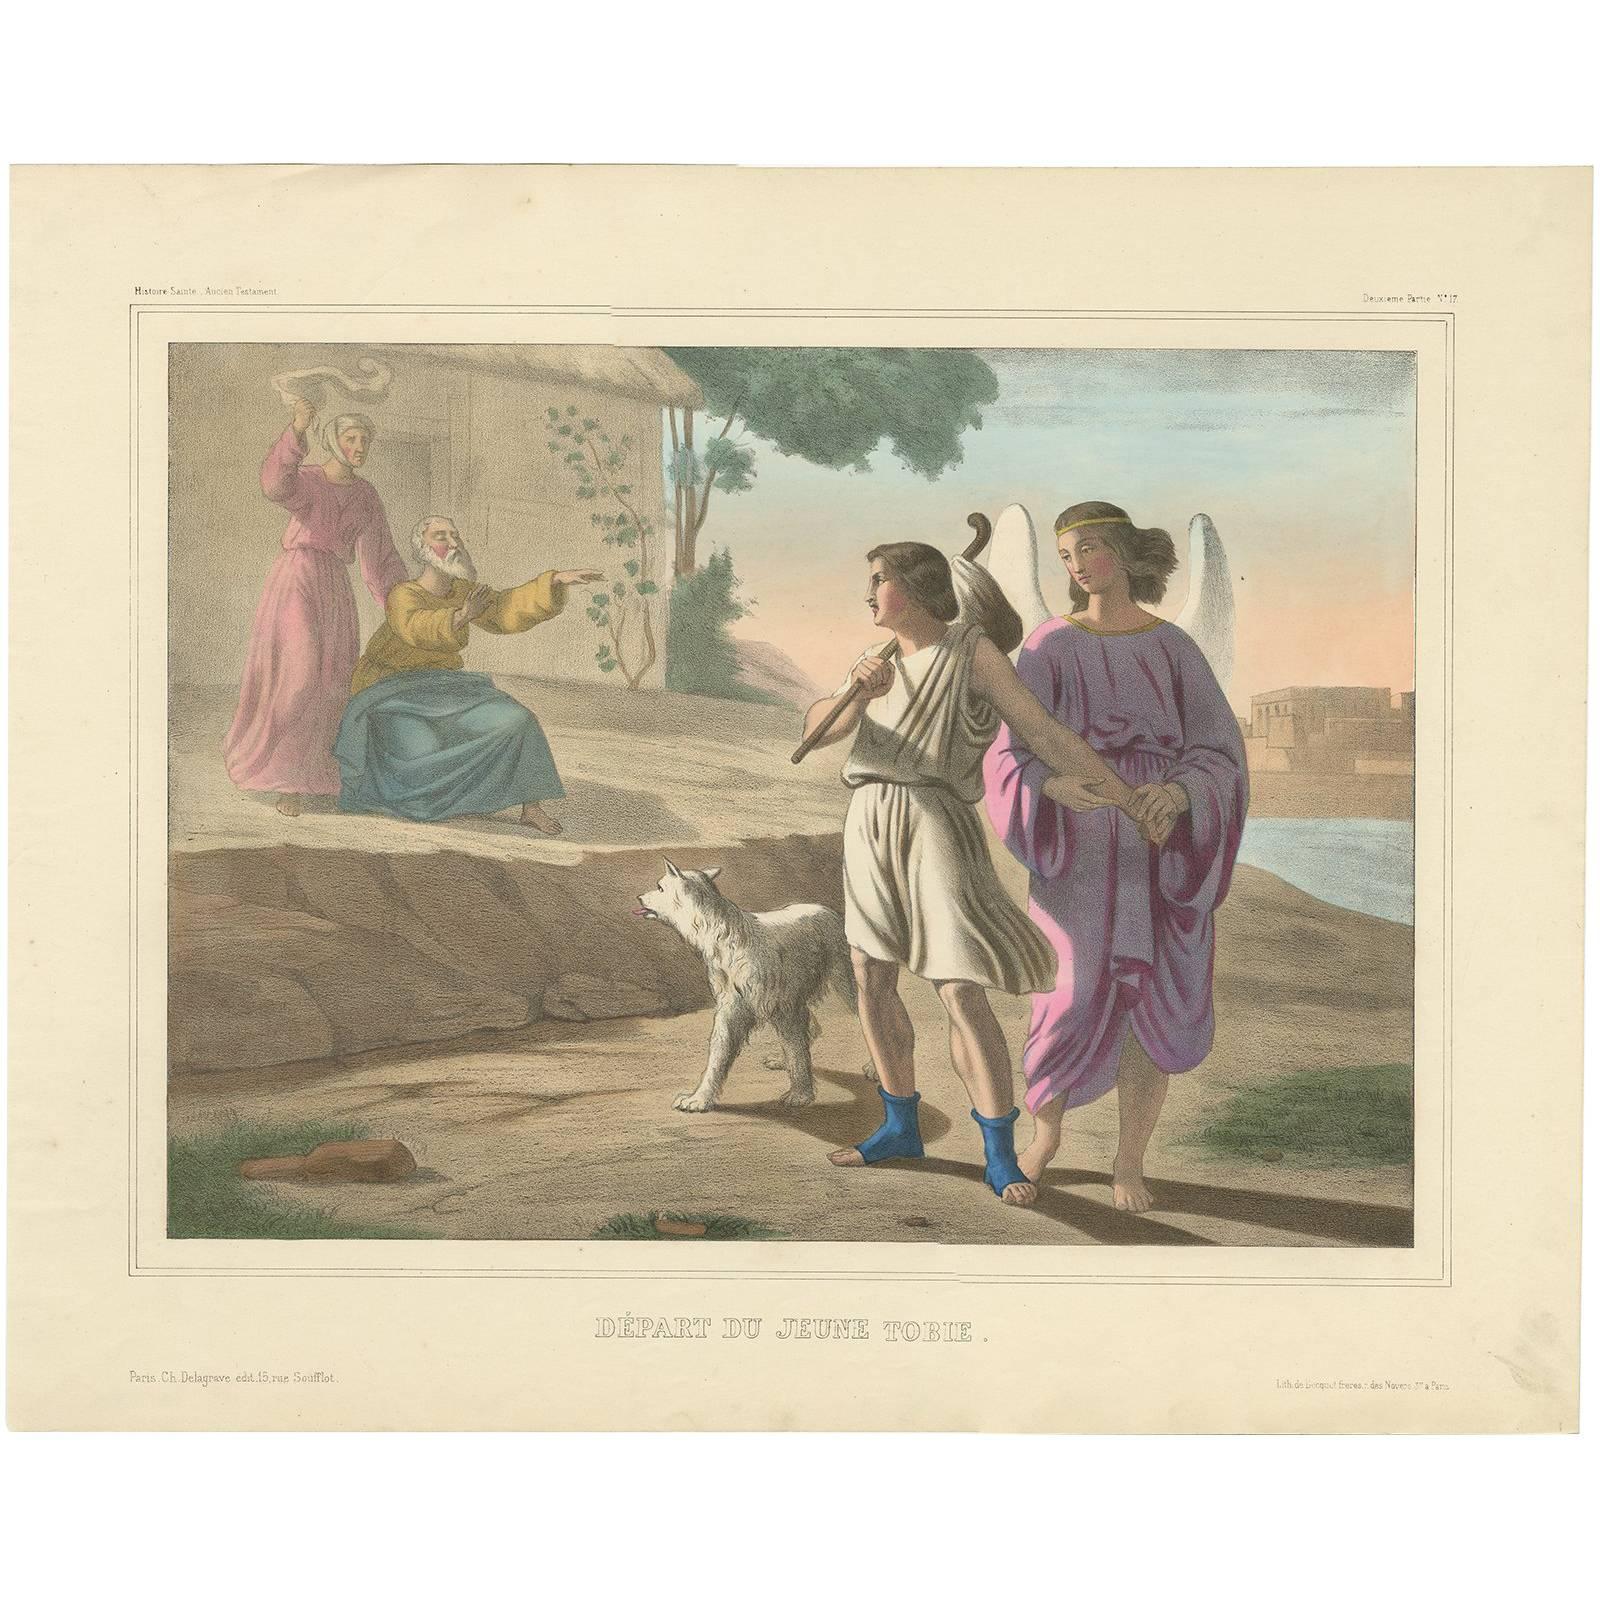 Antique Religious Print 'No. 17' The Departure of Young Tobias, circa 1840